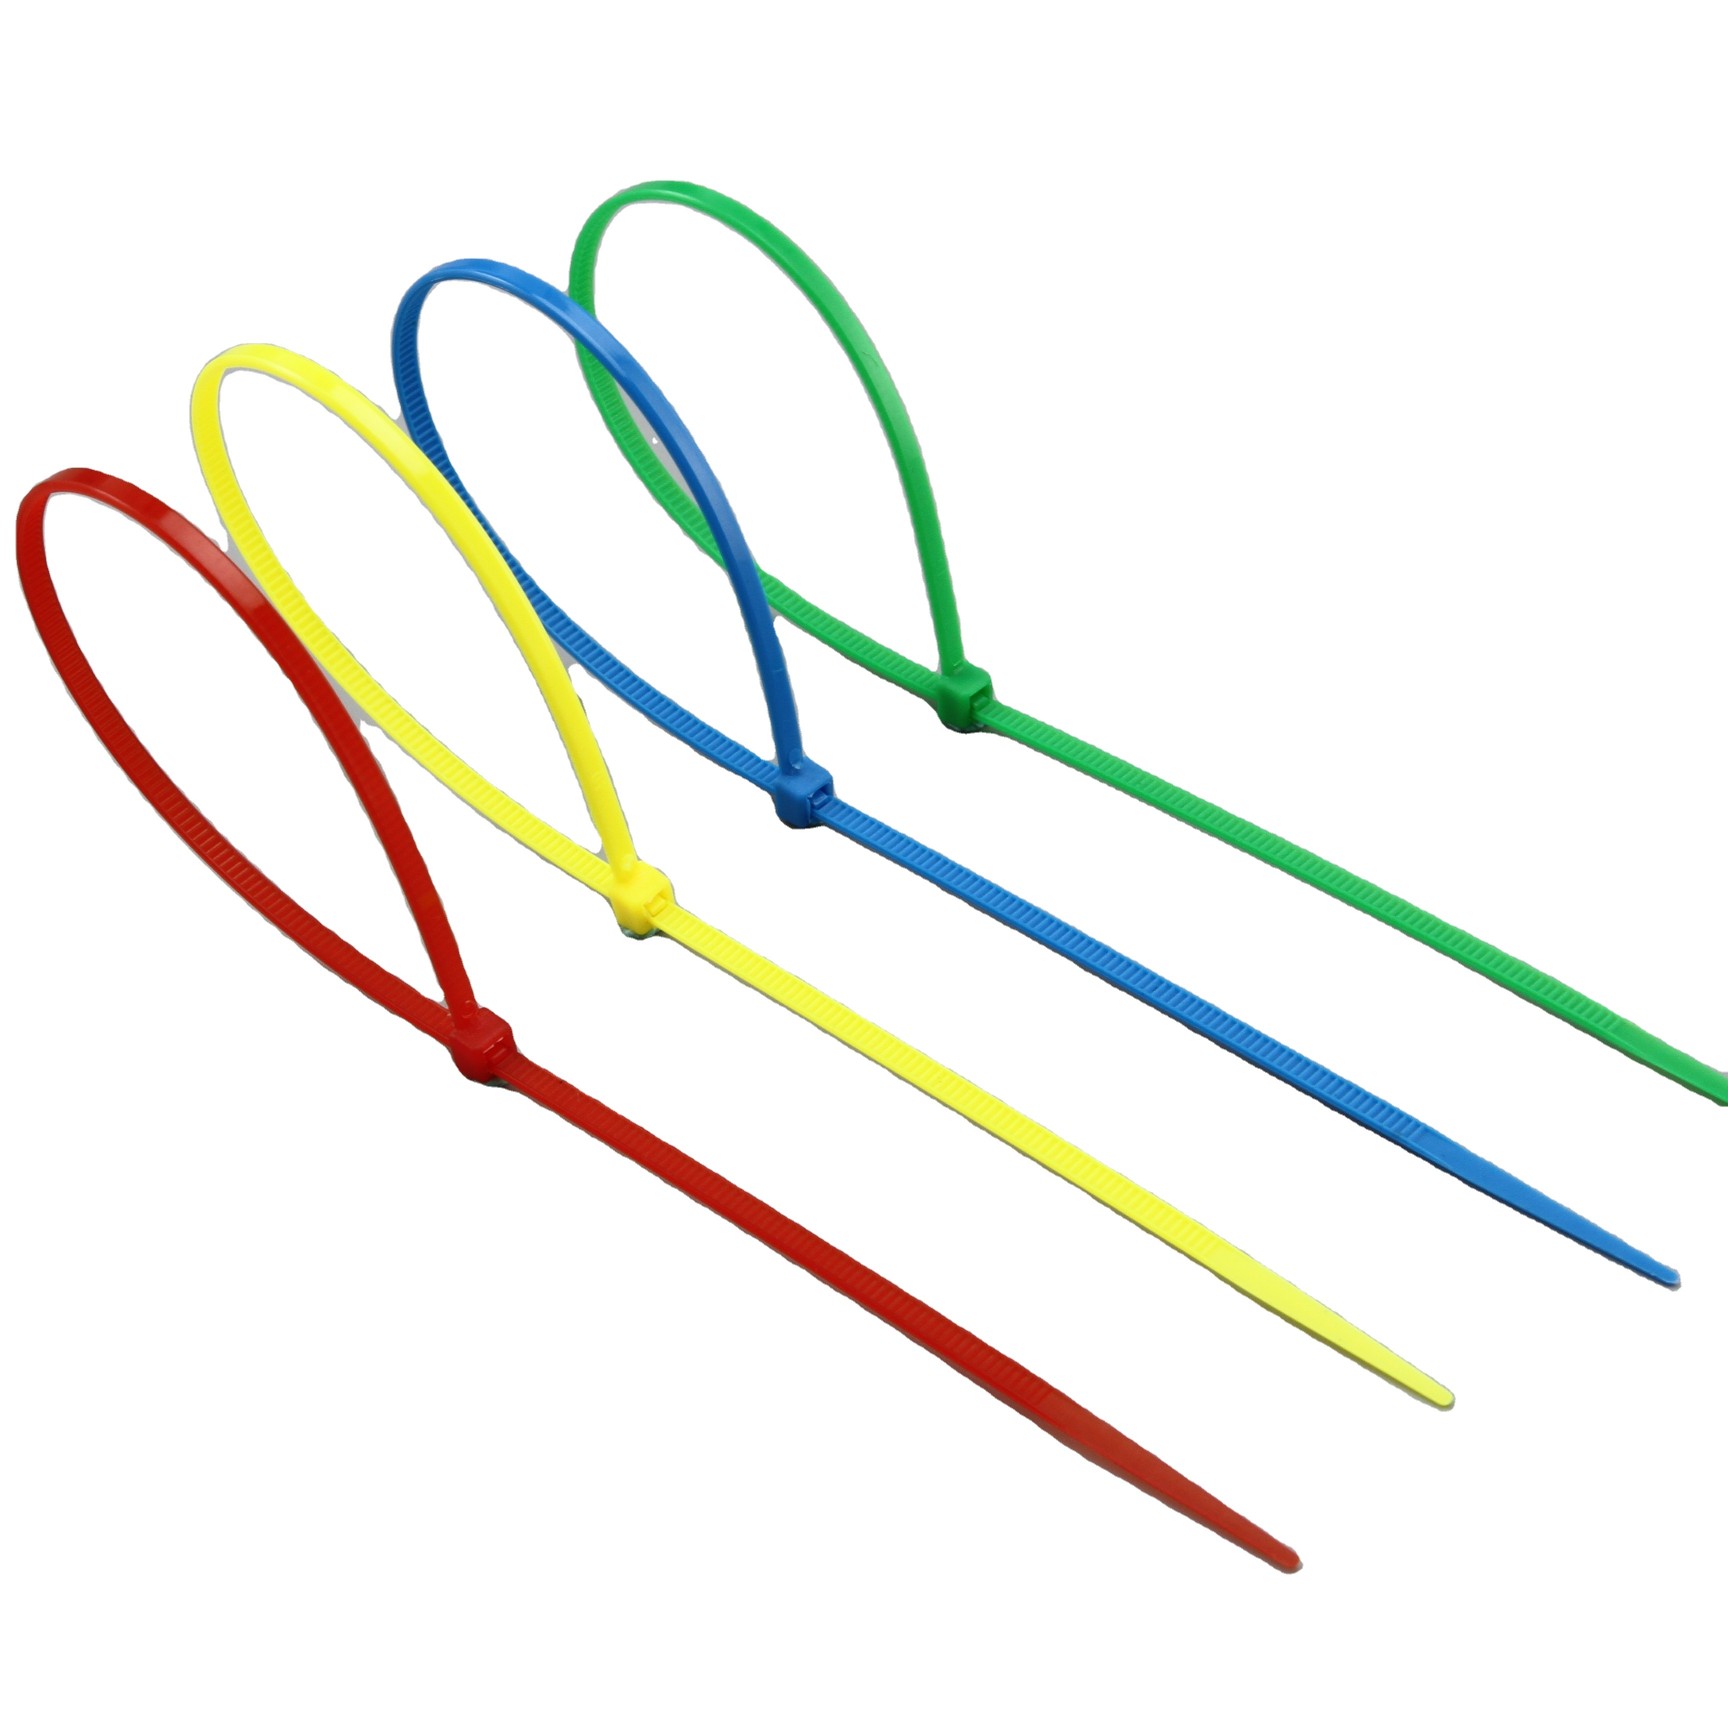 Adjustable nylon cable ties - 2